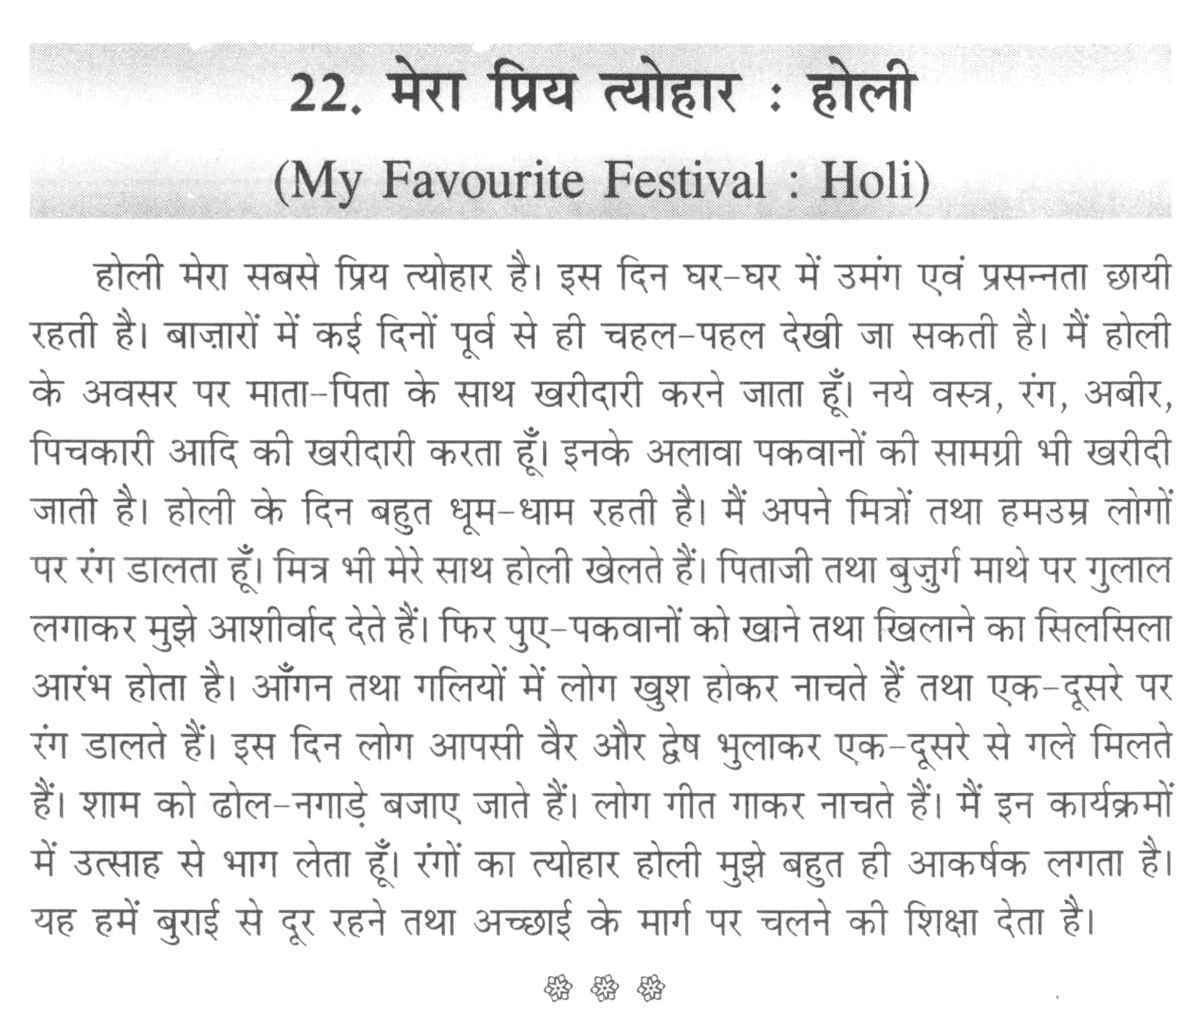 Holi festival essay in marathi